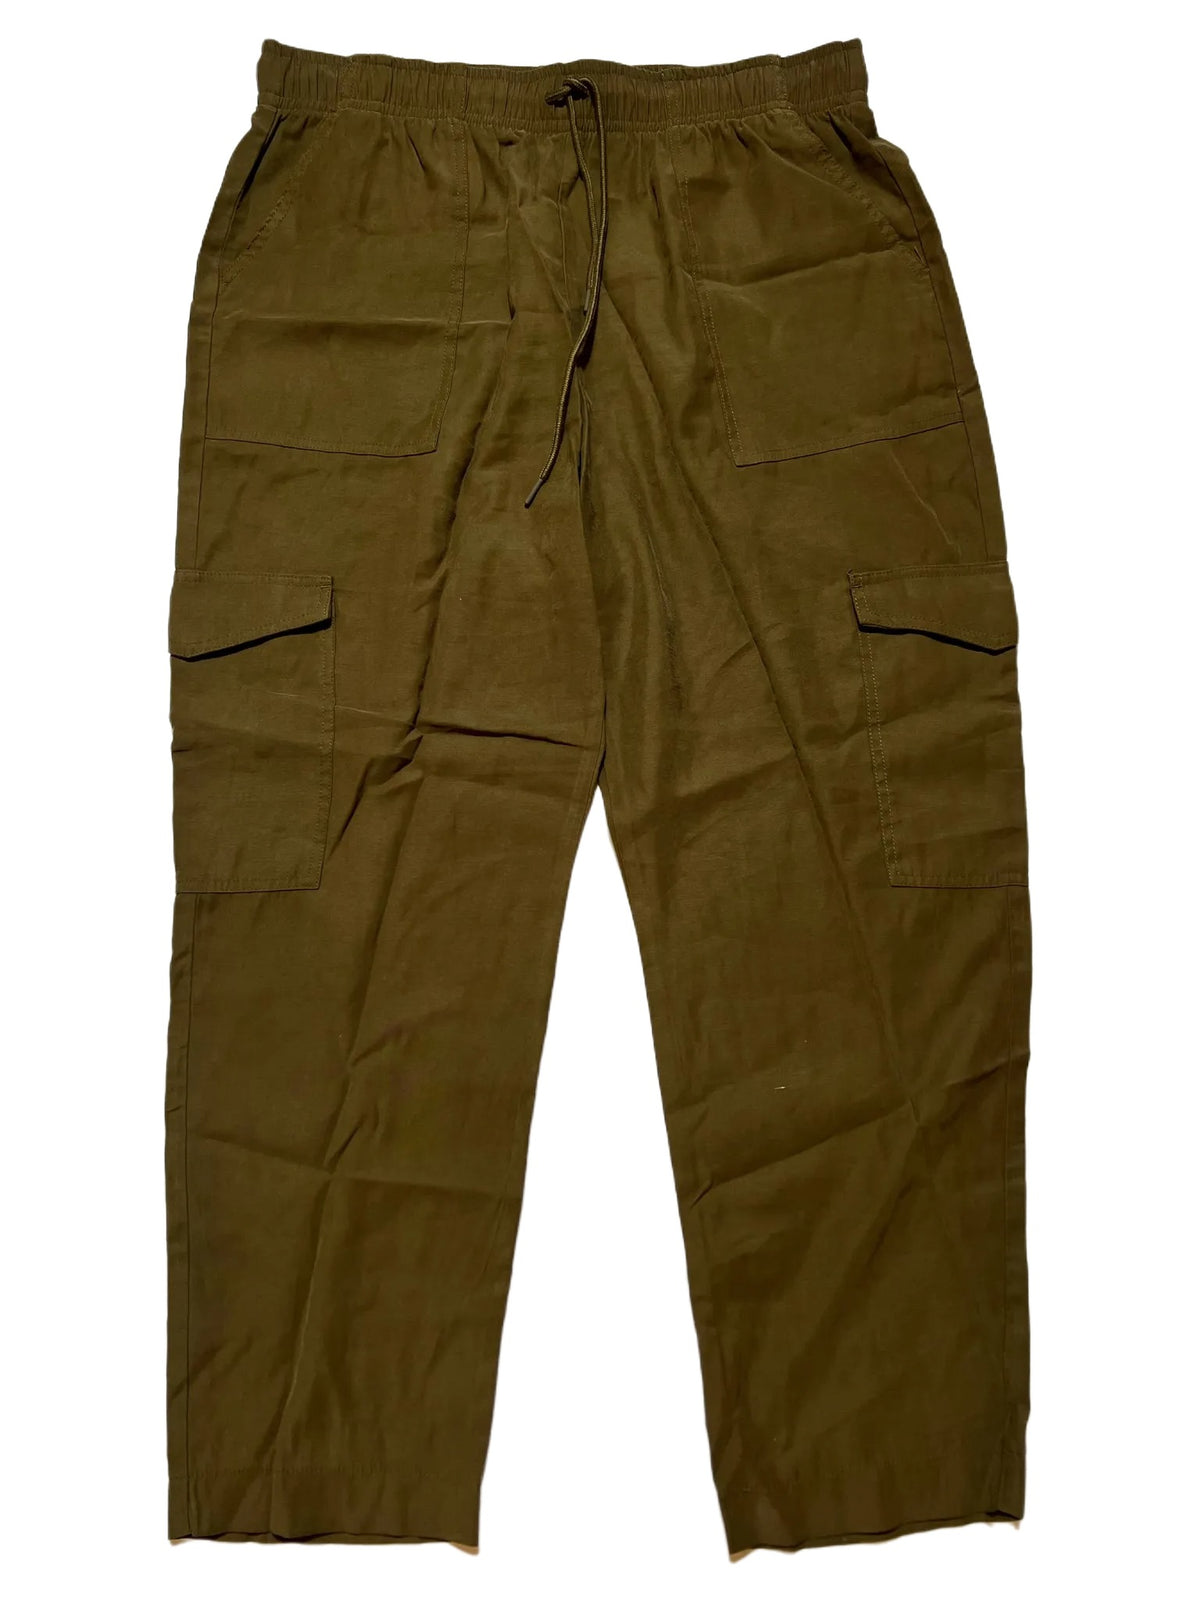 Dynamite- Green Cargo Style Pants